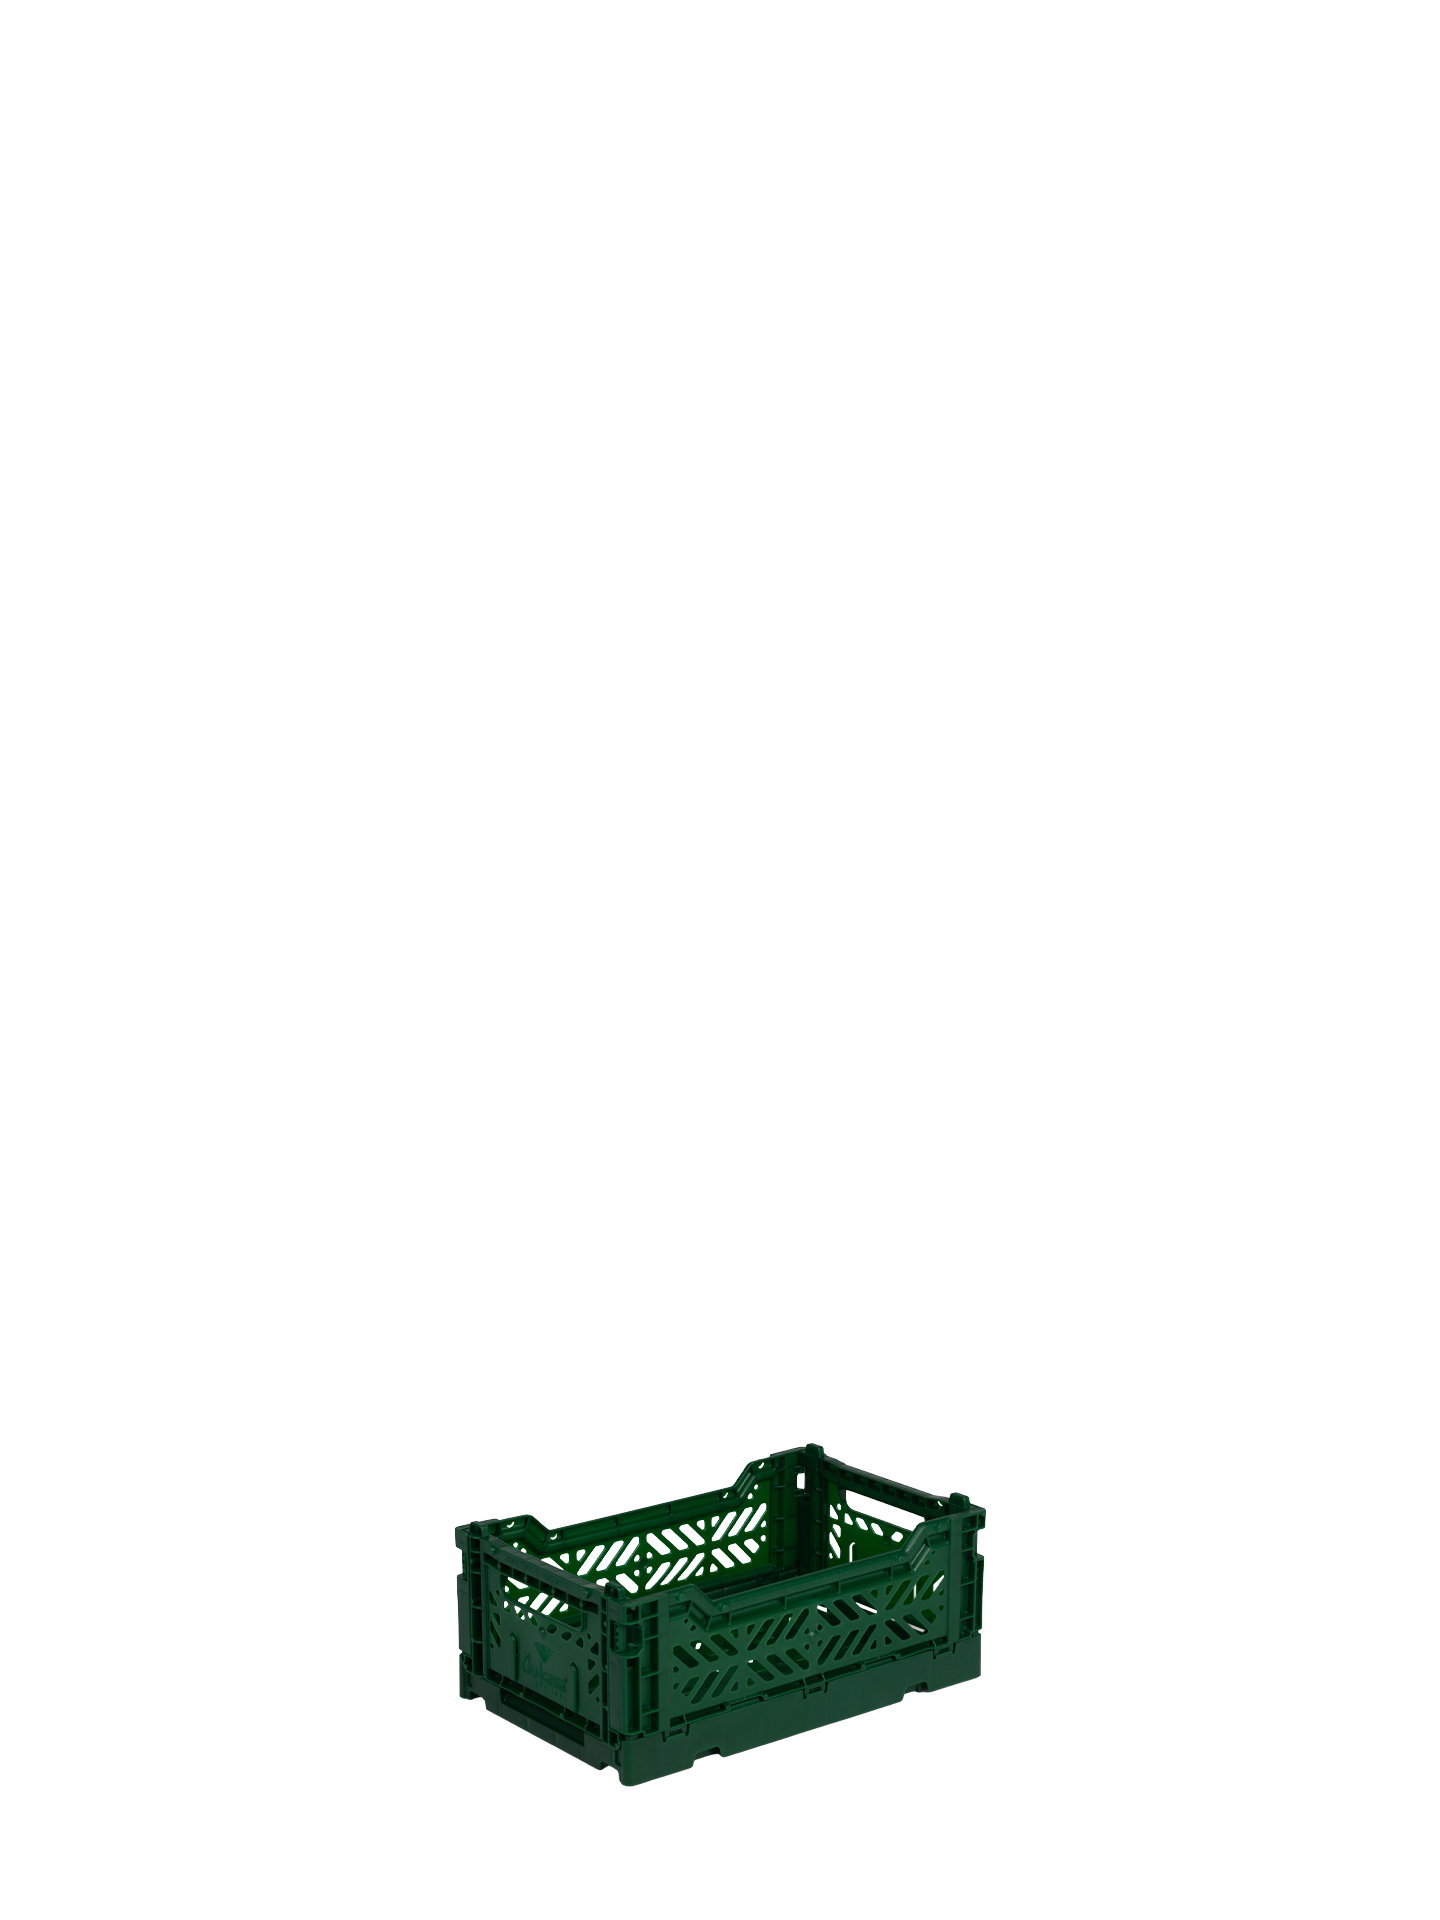 Mini Aykasa crate in dark spruce green stacks and folds